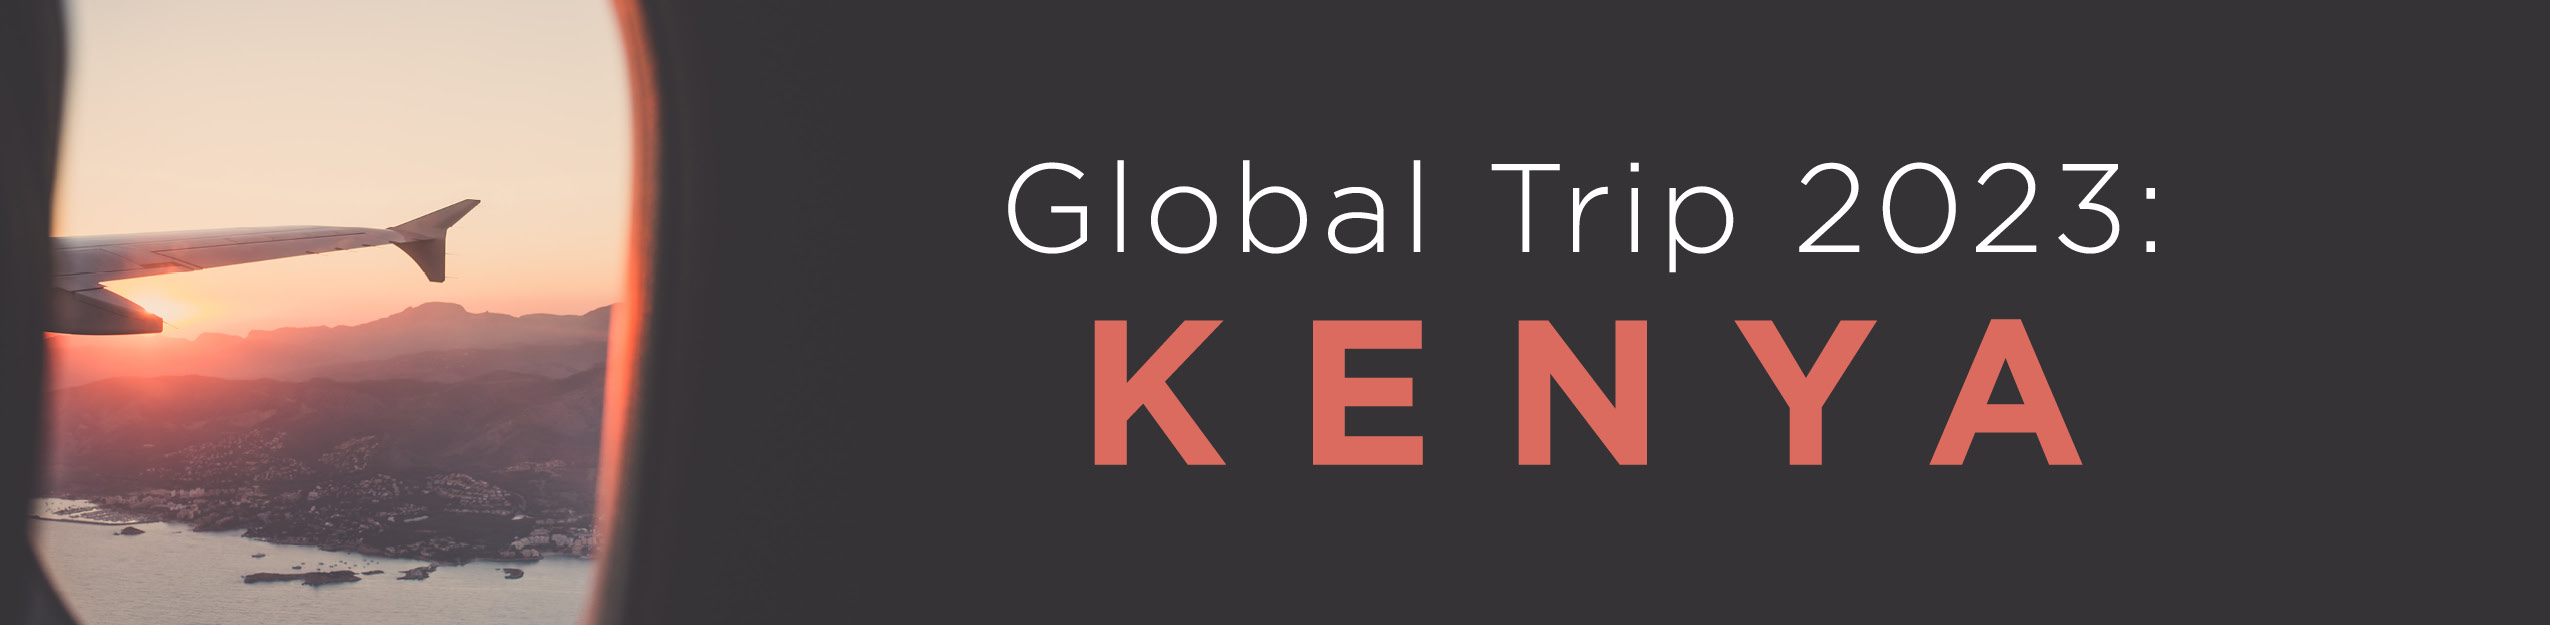 Global Trip Kenya